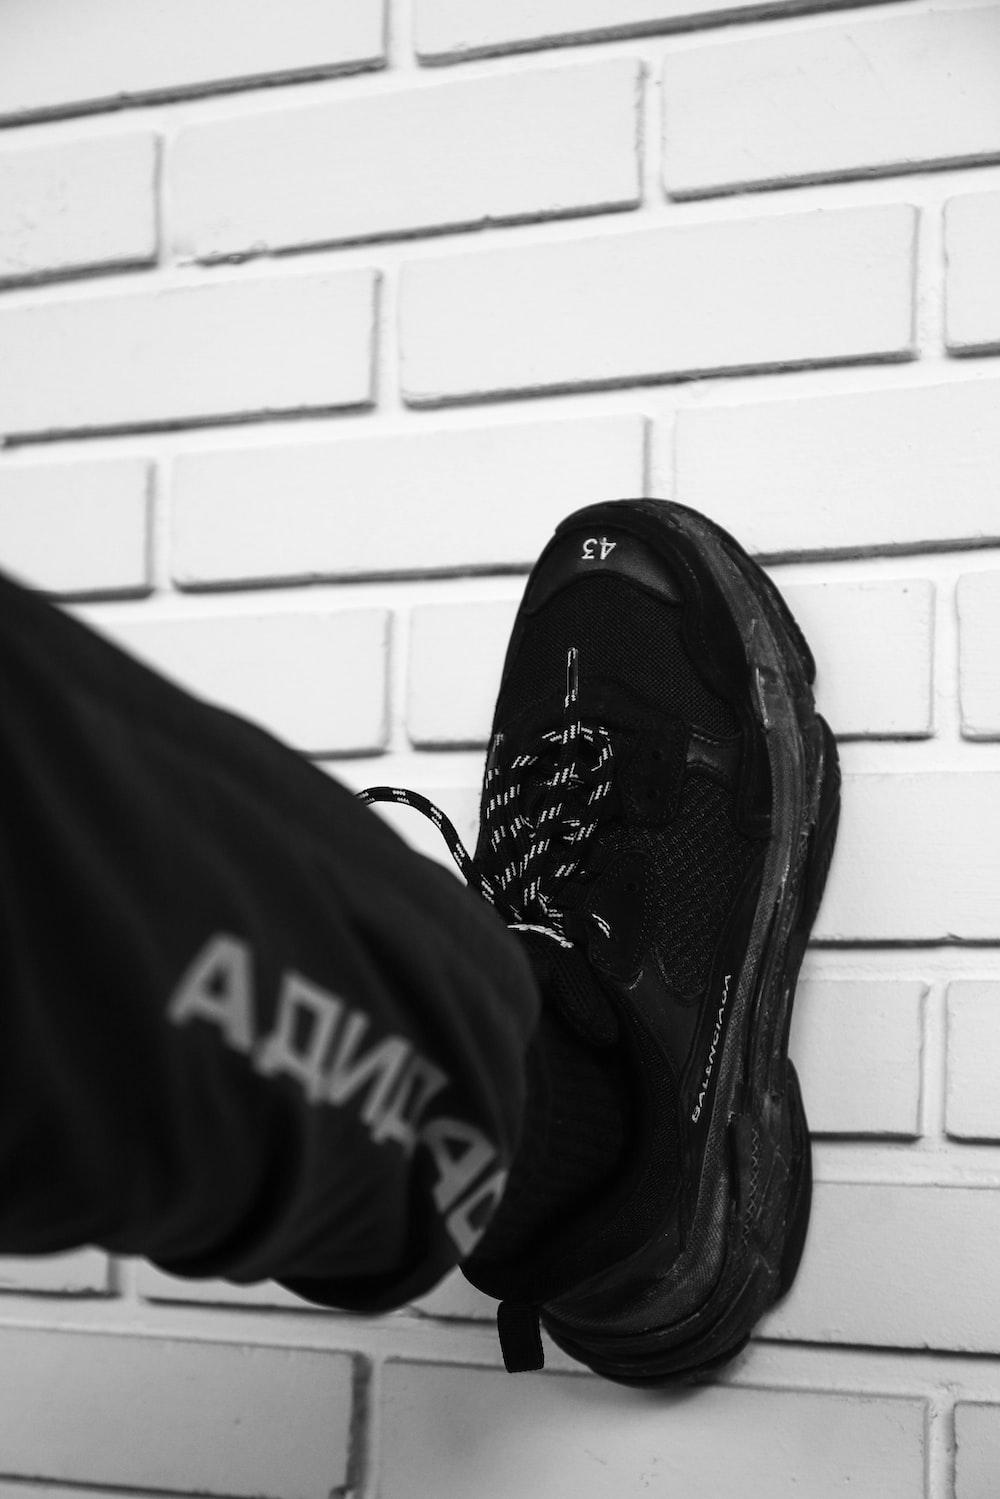 Person wearing black Nike Vapor Max shoe photo Free Fashion